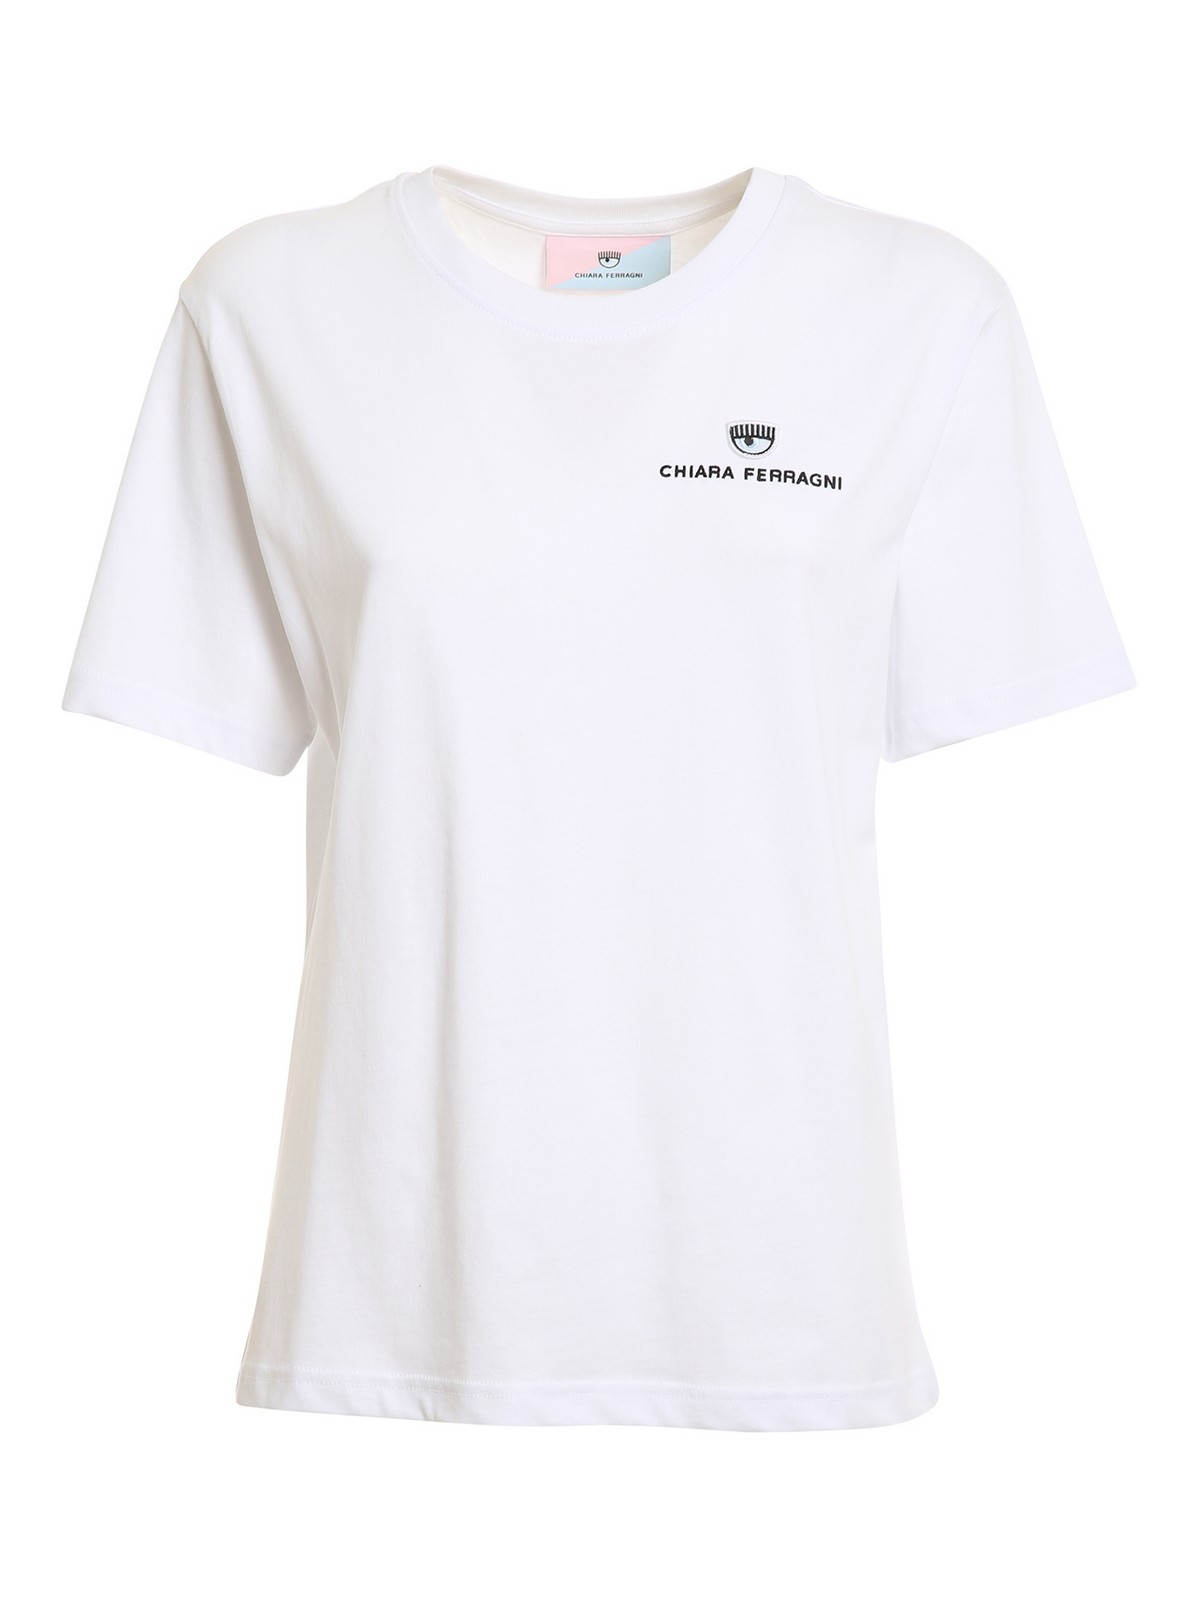 Chiara Ferragni Branded T-shirt In White